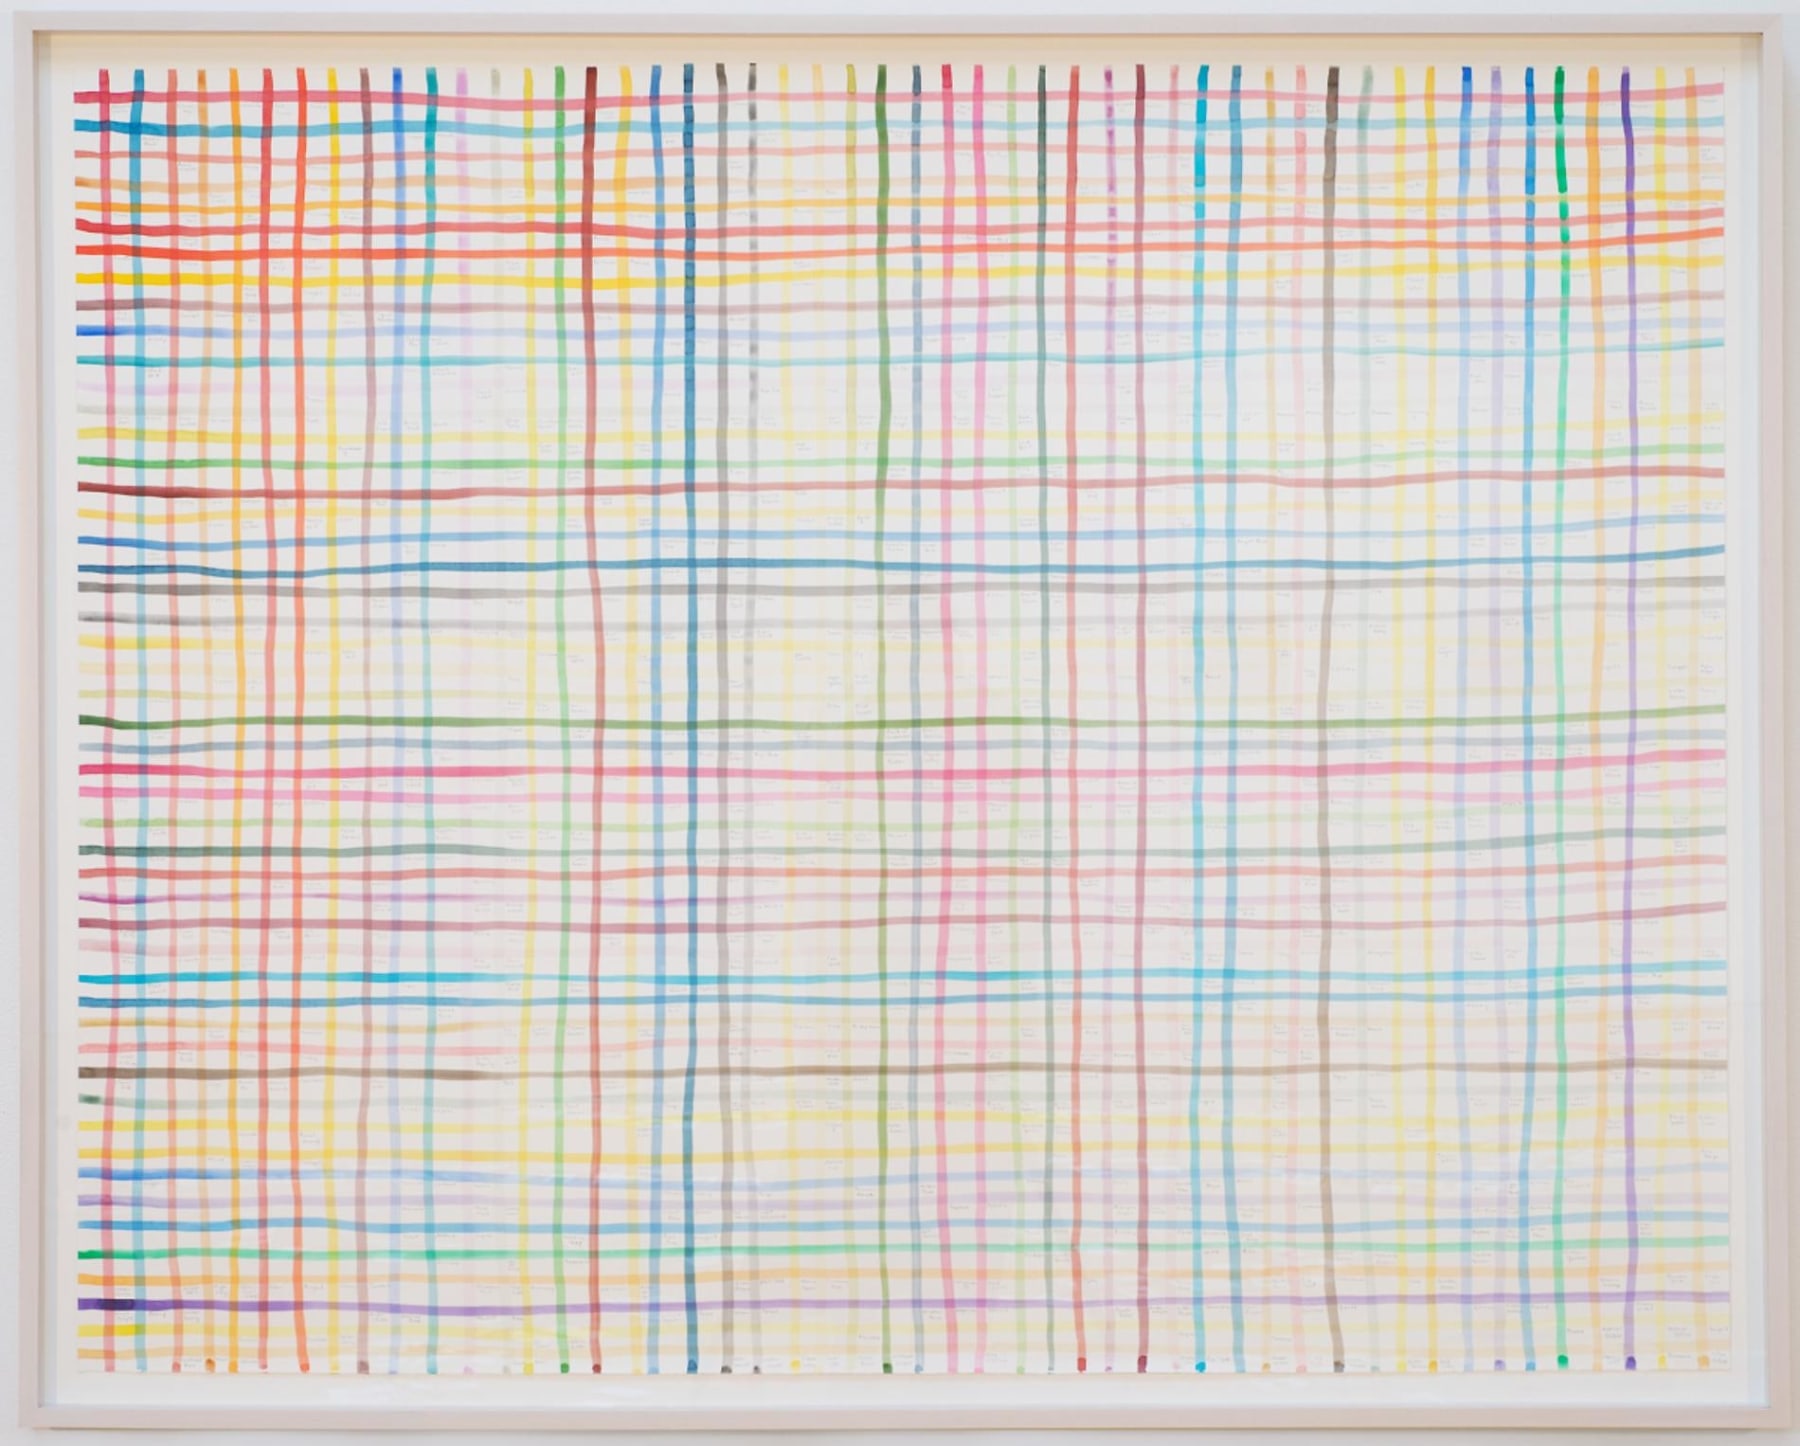 multi-colored, Watercolor grid on paper